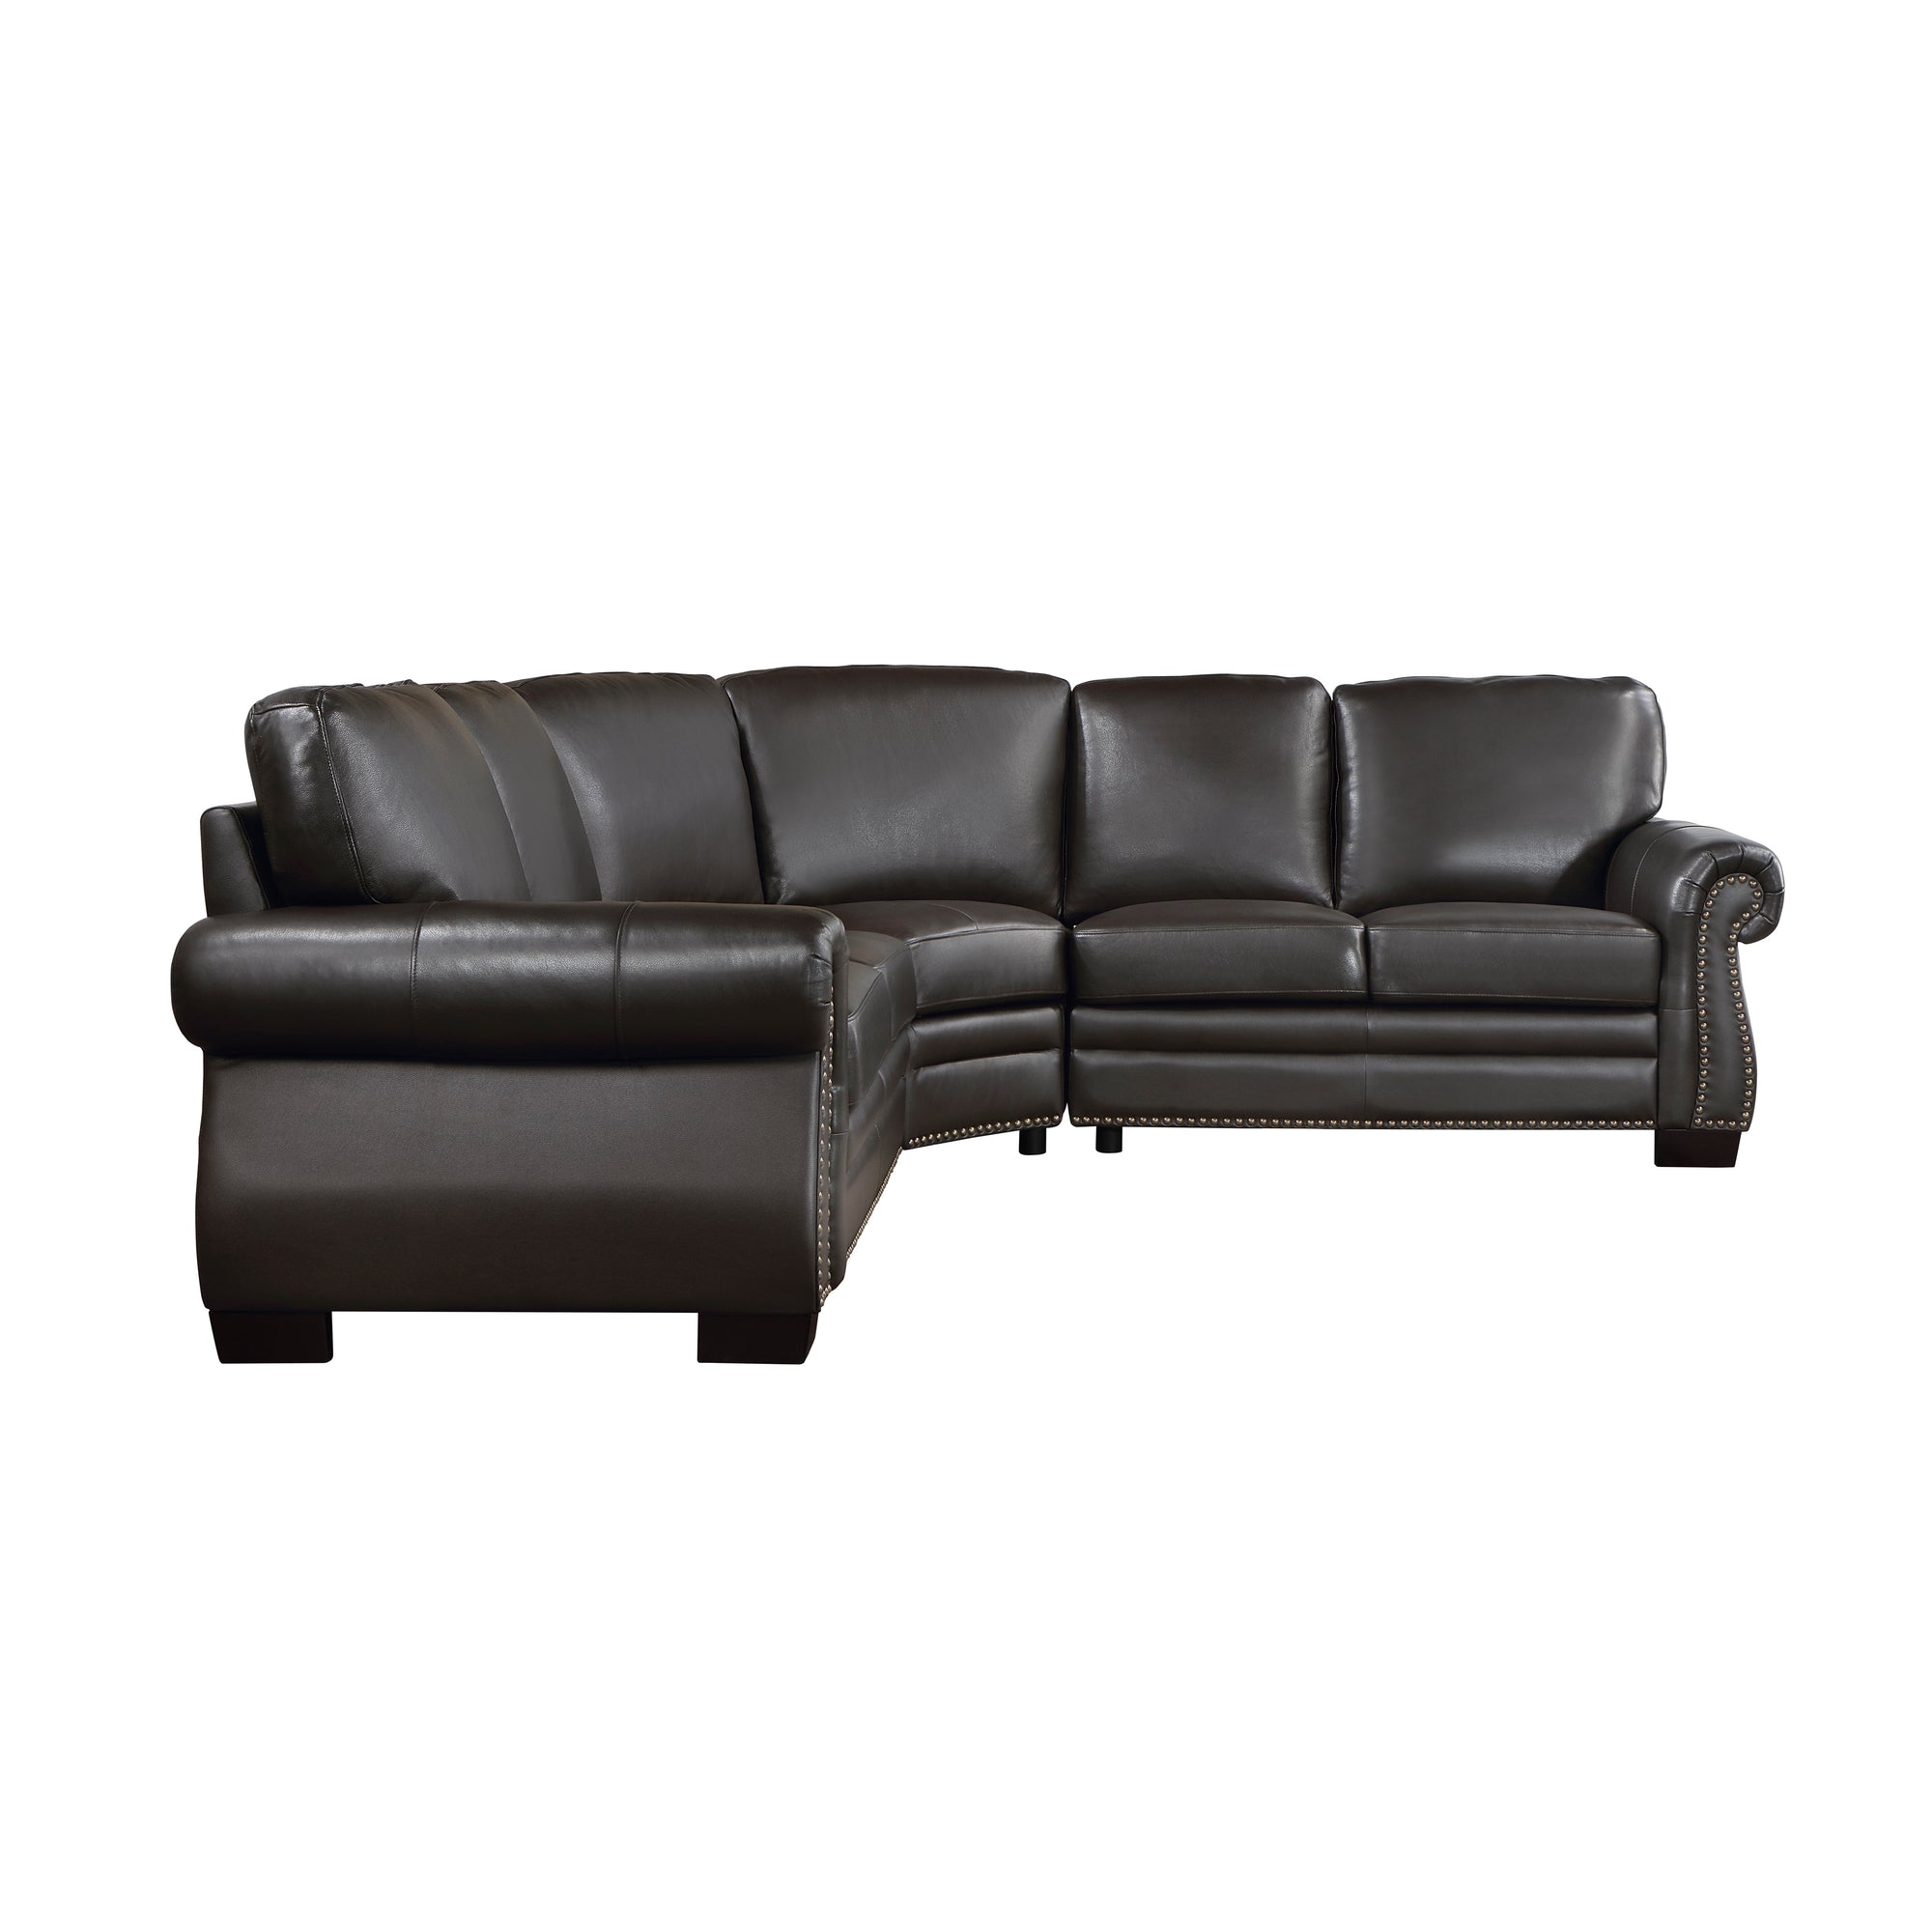 Wyatt 3-Piece Leather Match Sectional Sofa